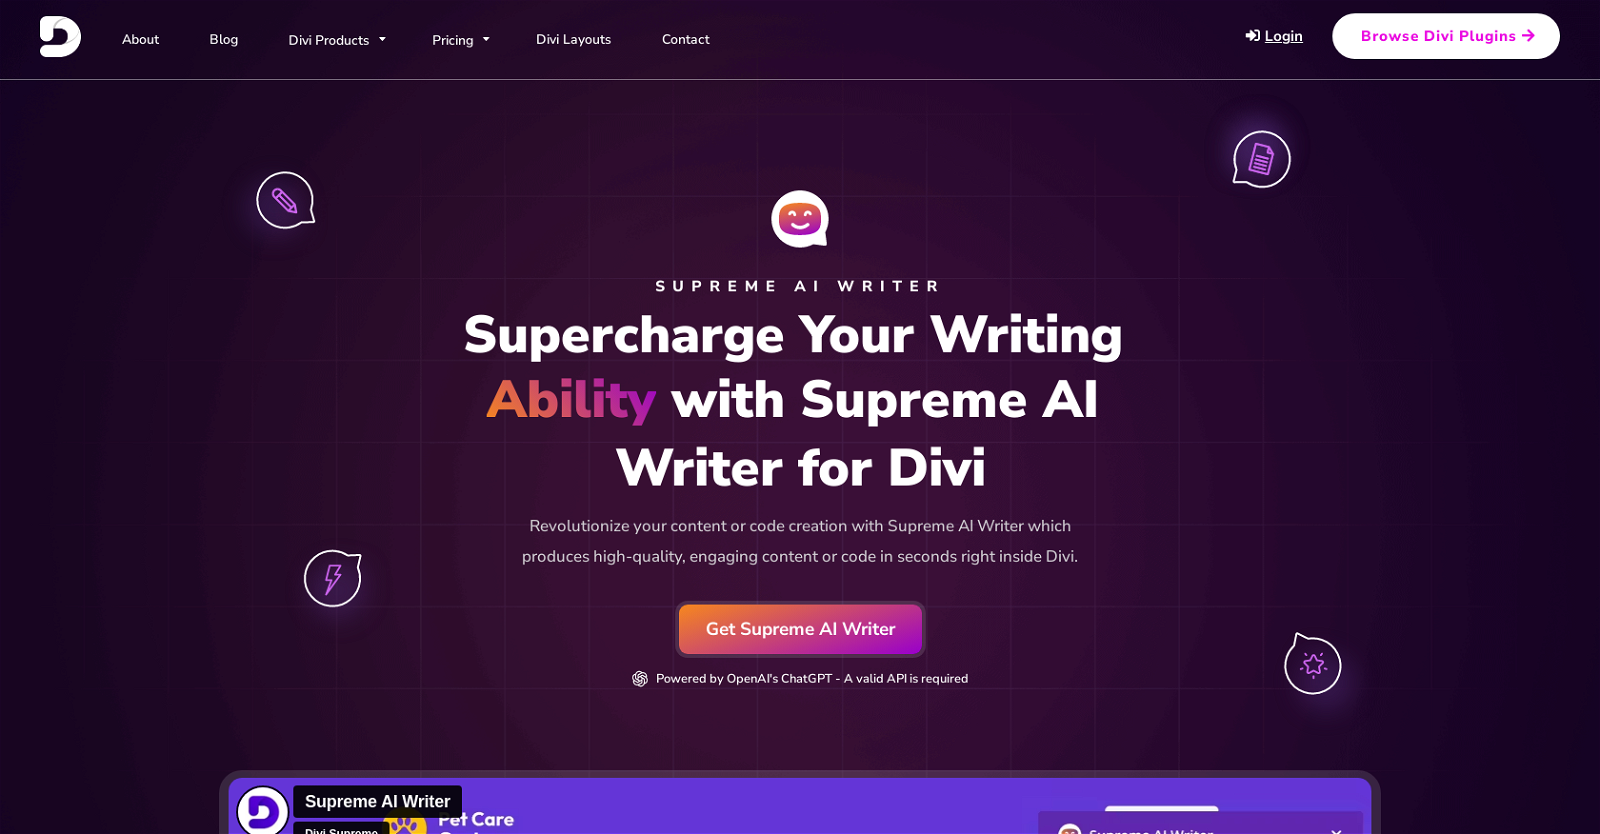 Supreme AI Writer website